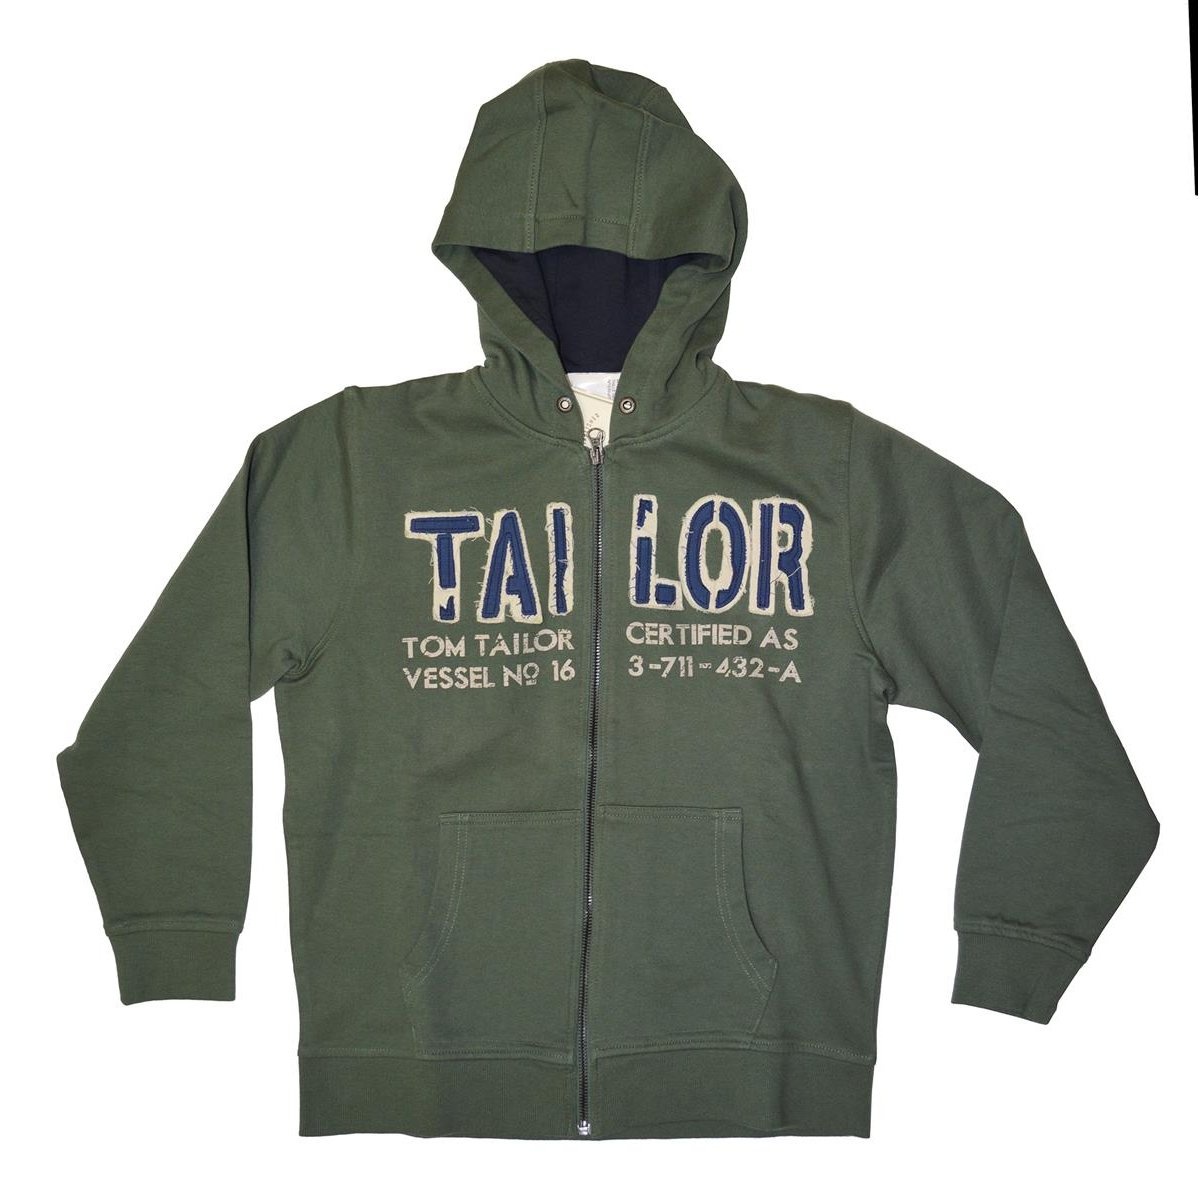 Tom Tailor Sweatjacket tailor - Größe:152